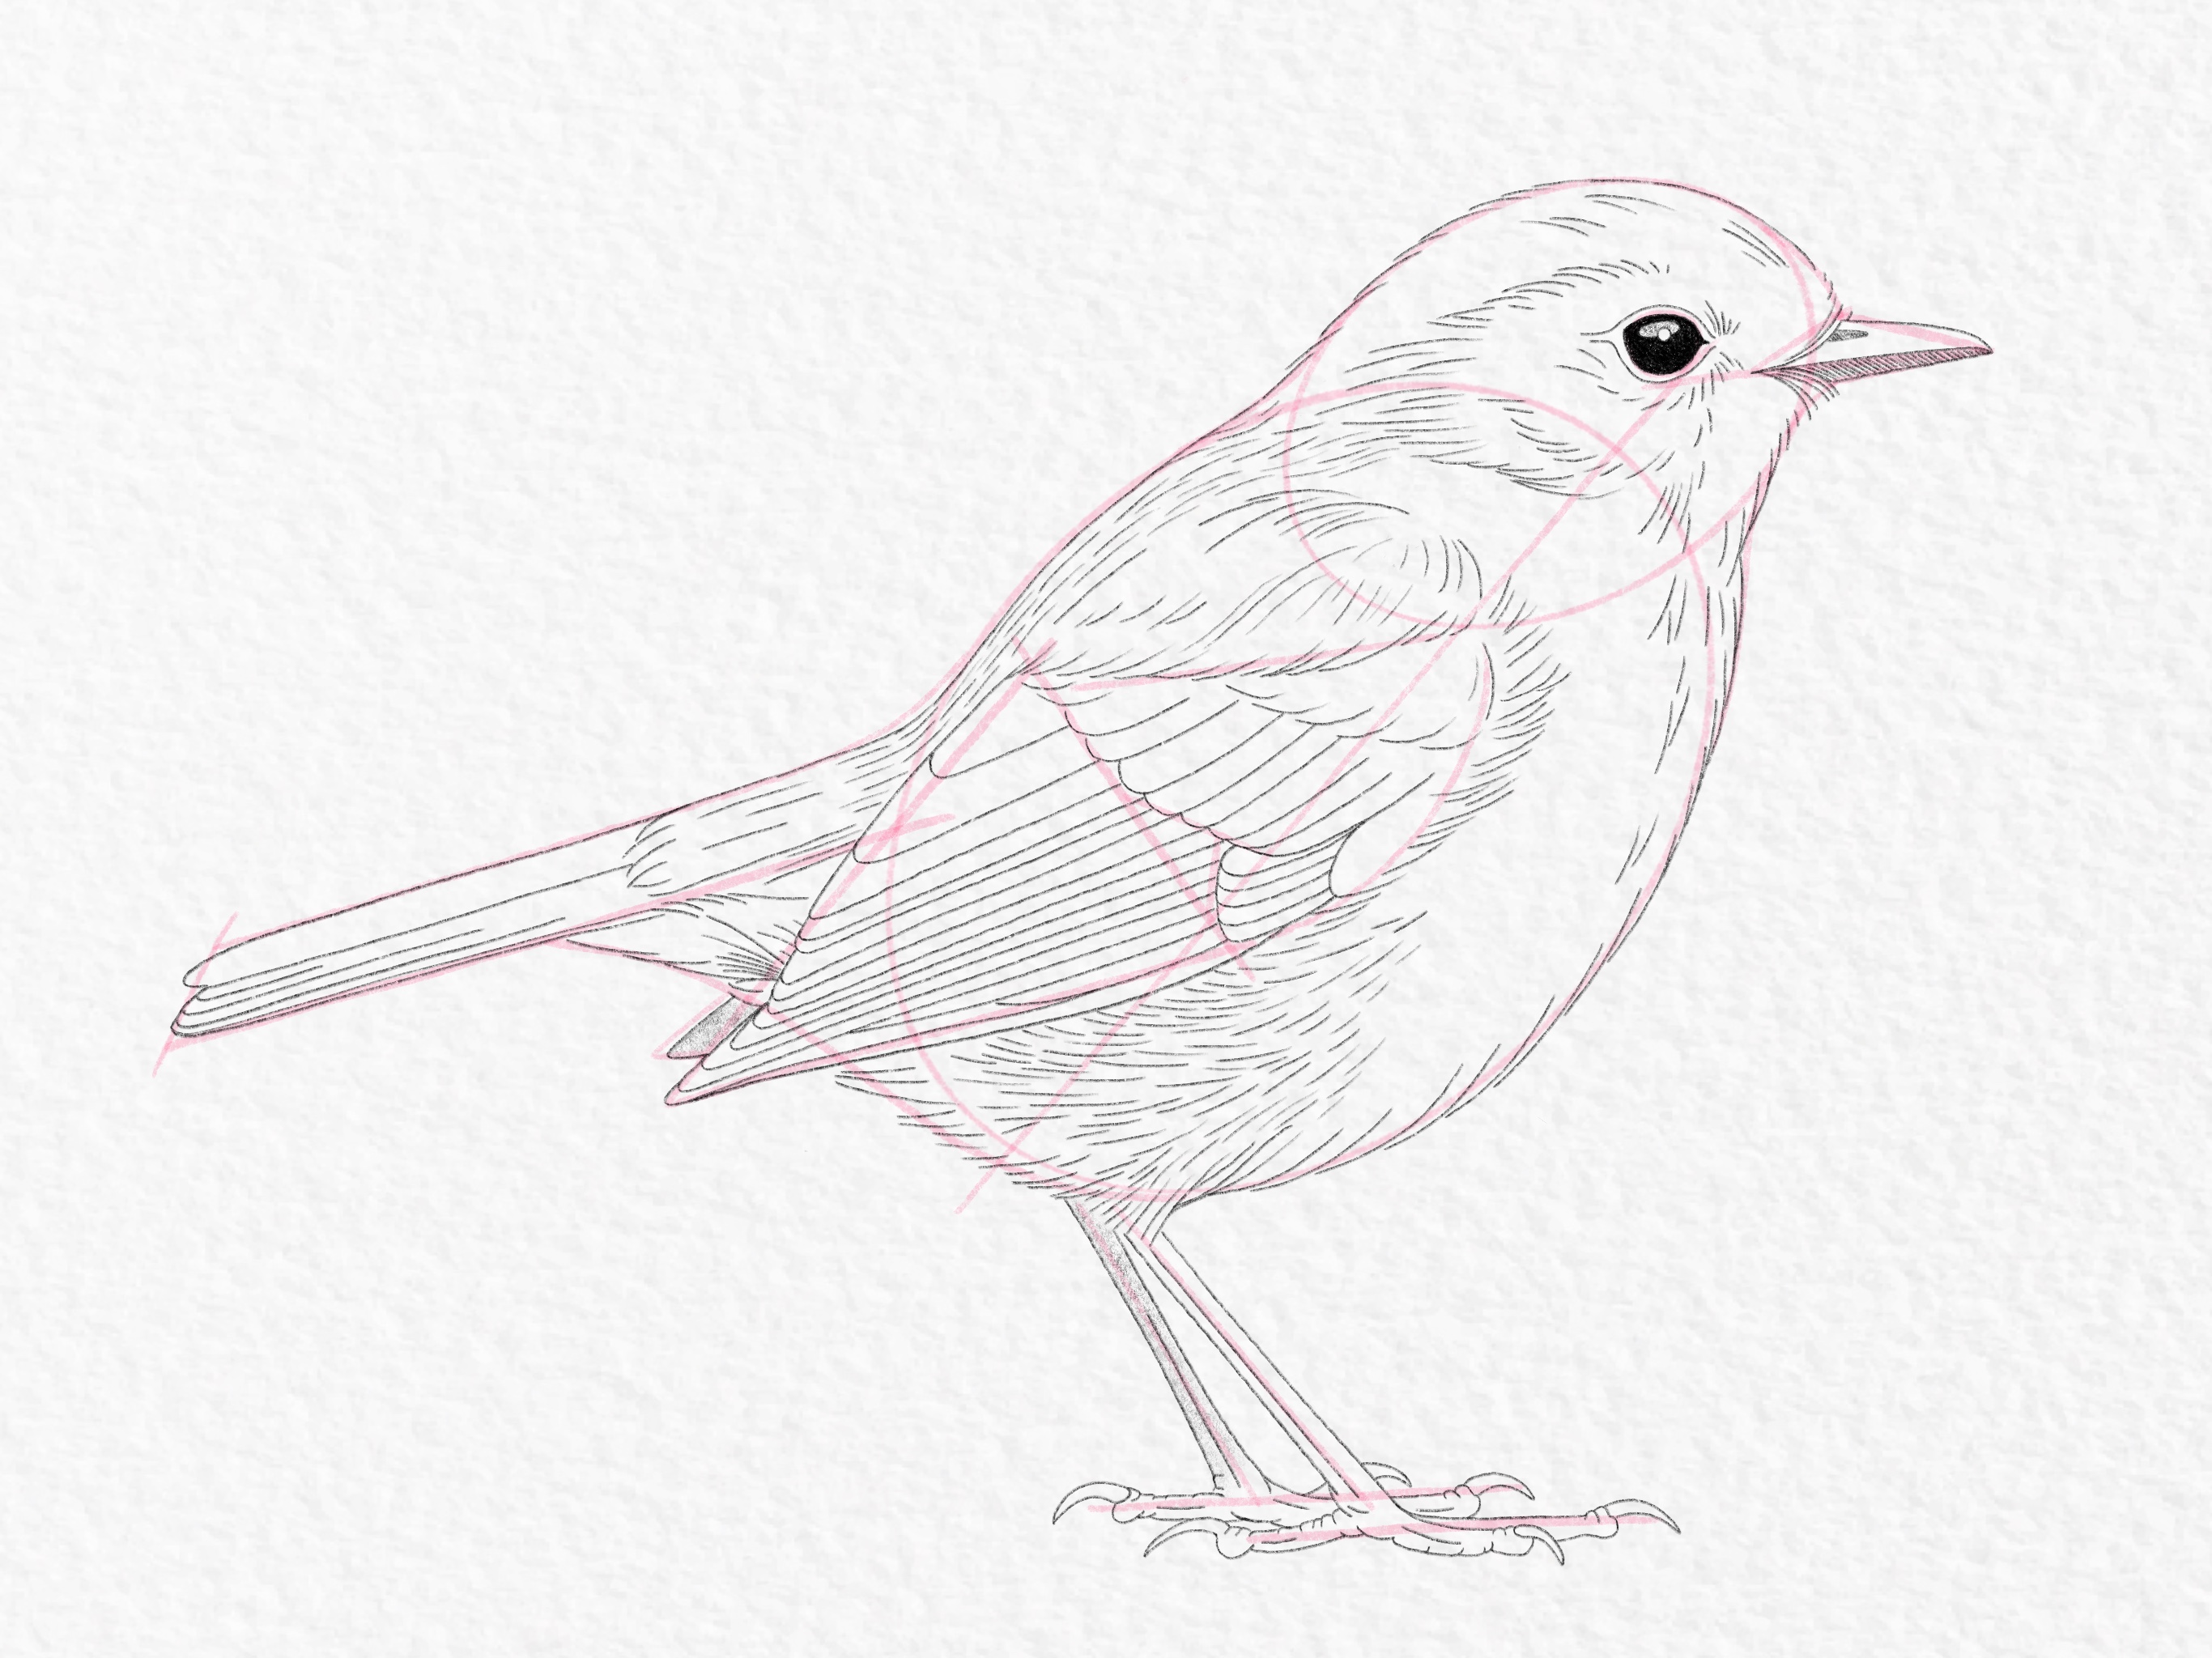 Pencil shading drawing of bird